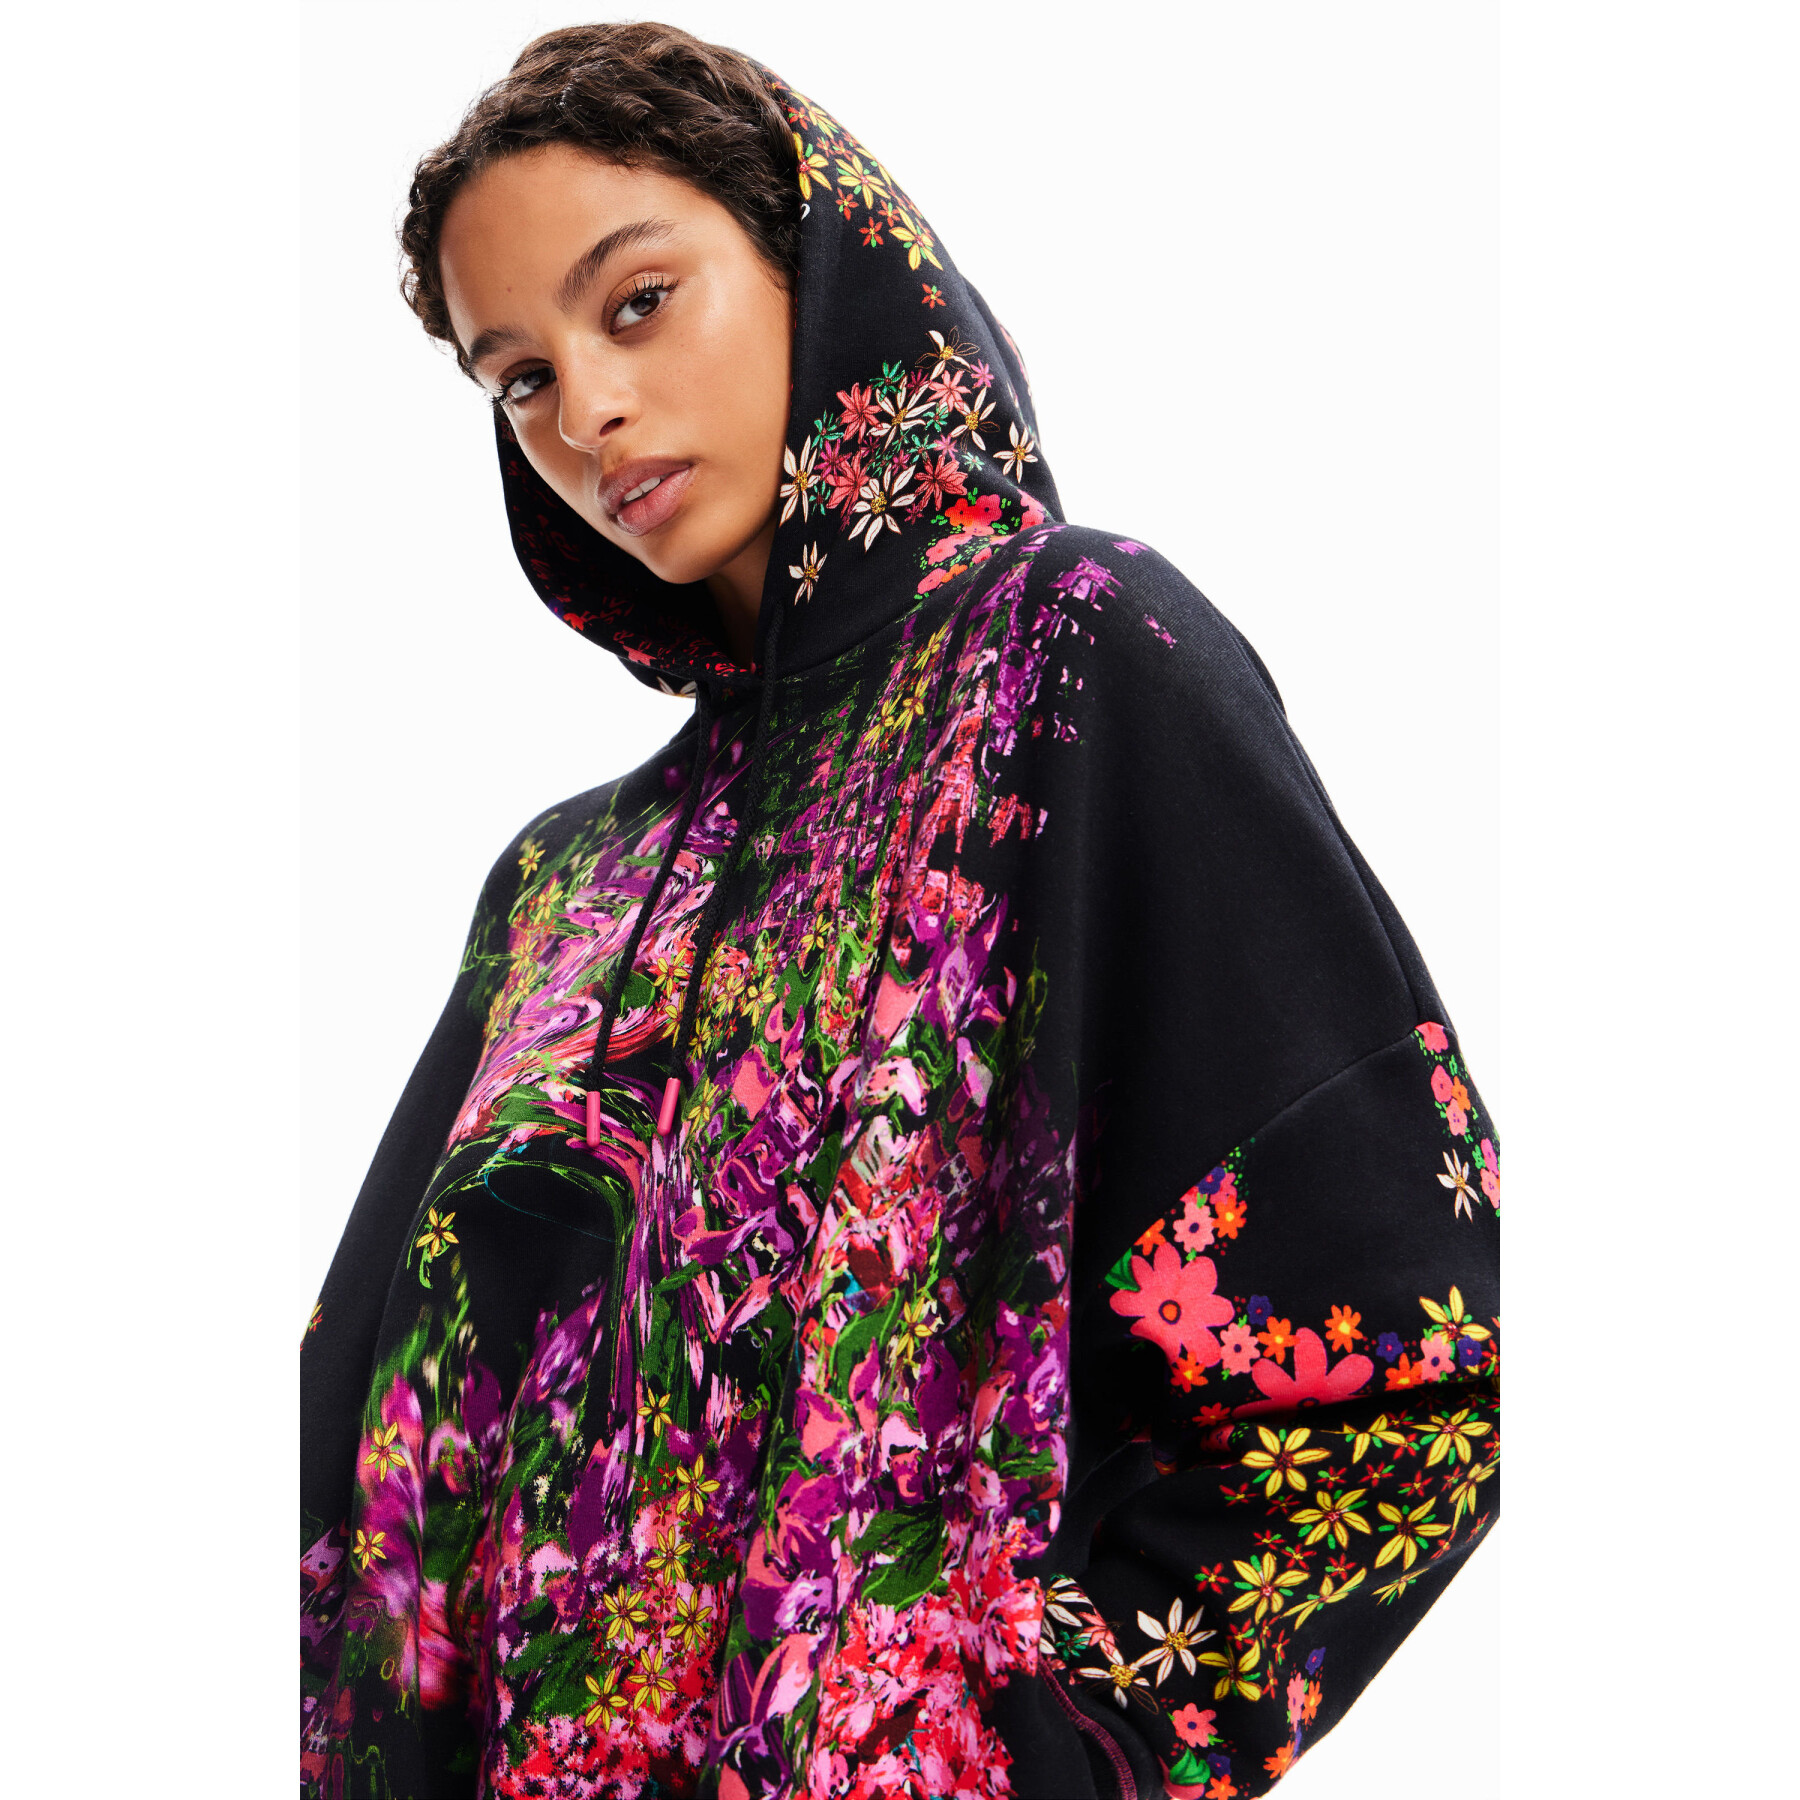 Sweatshirt floral de grandes dimensões para mulher Desigual